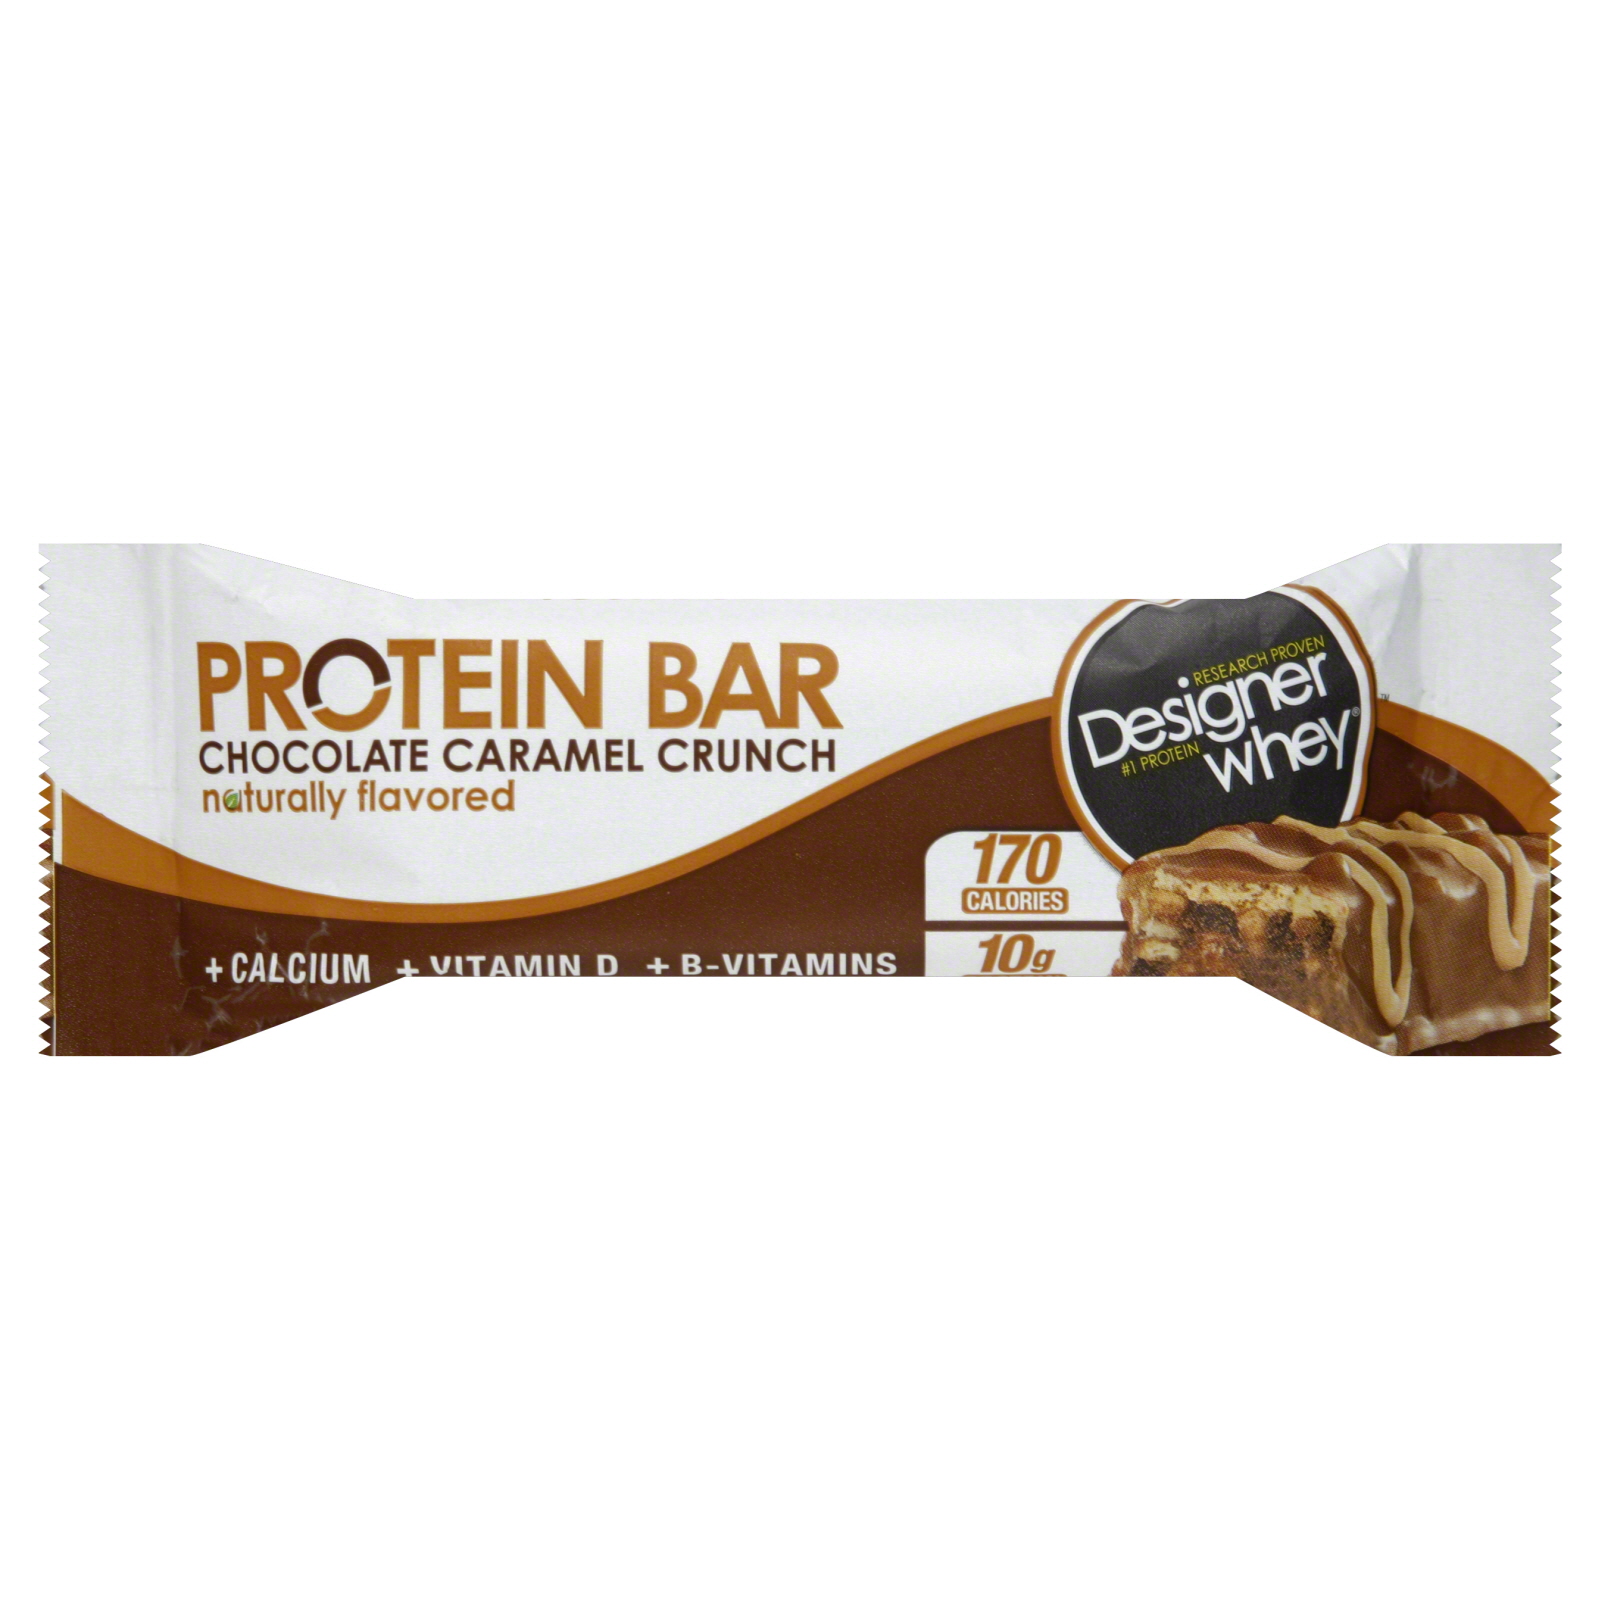 Designer Whey Protein Bar, Chocolate Caramel Crunch, 1.41 oz